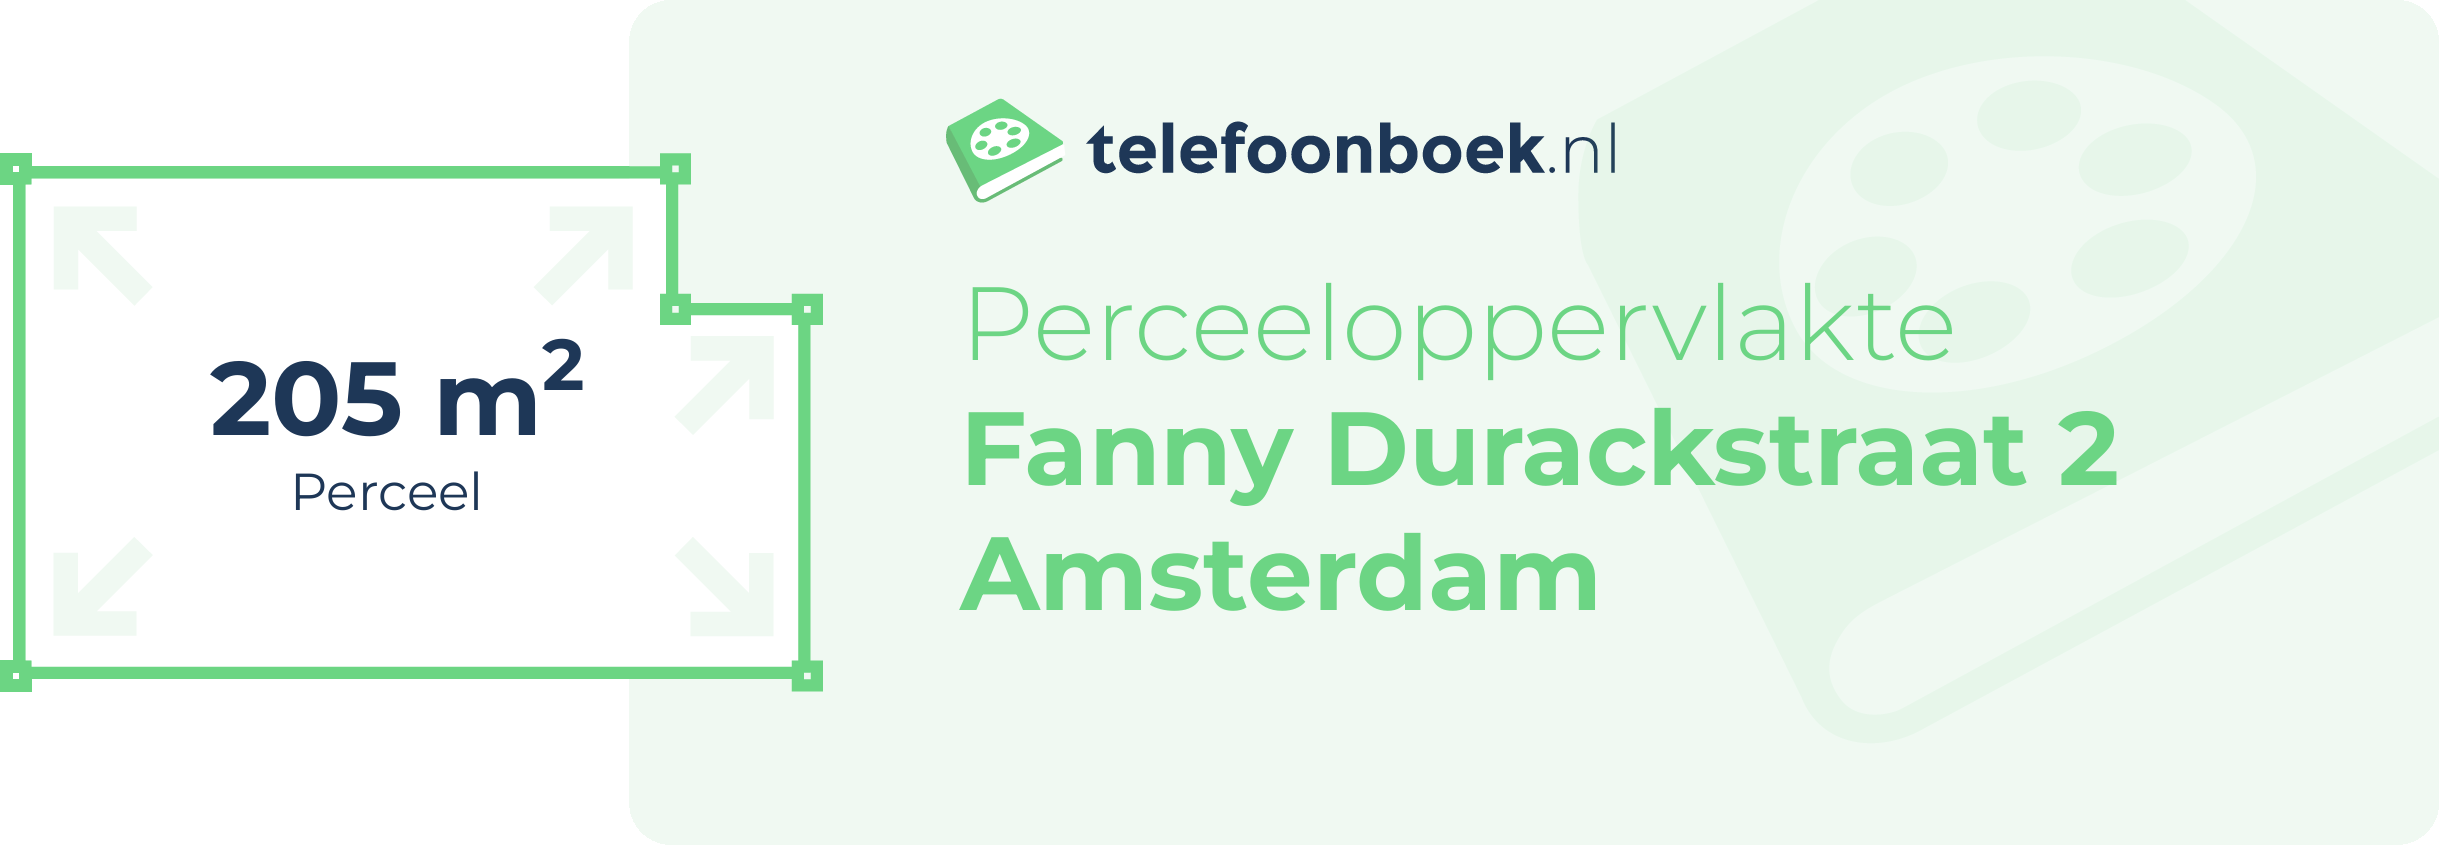 Perceeloppervlakte Fanny Durackstraat 2 Amsterdam